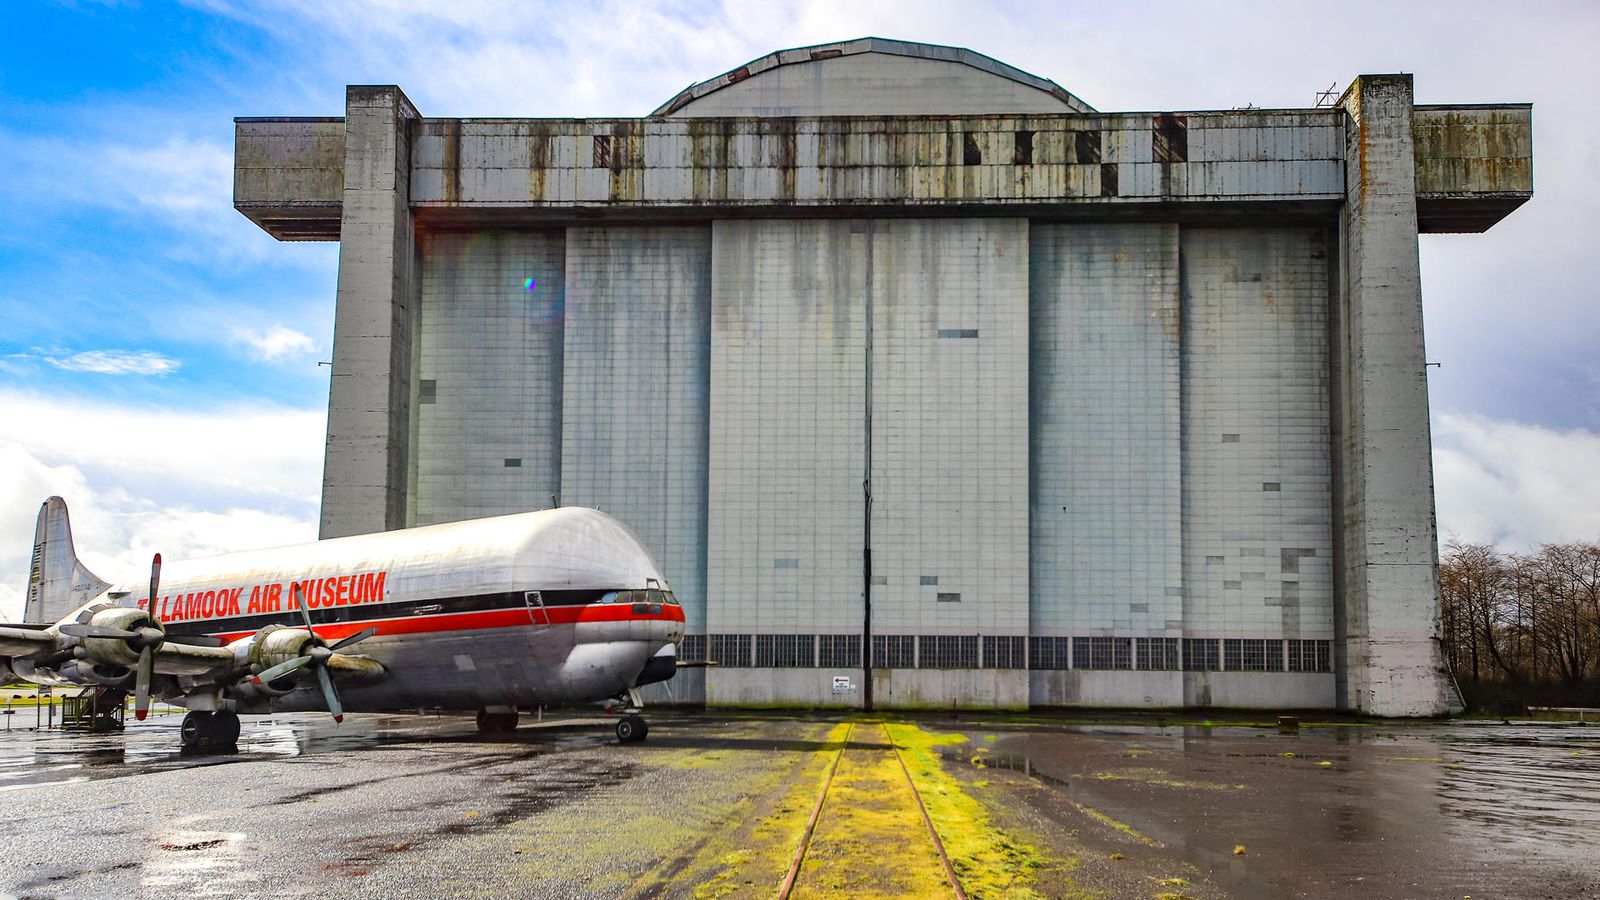 Ghost Blimps Haunt A Humongous Hangar At The Tillamook Air Museum